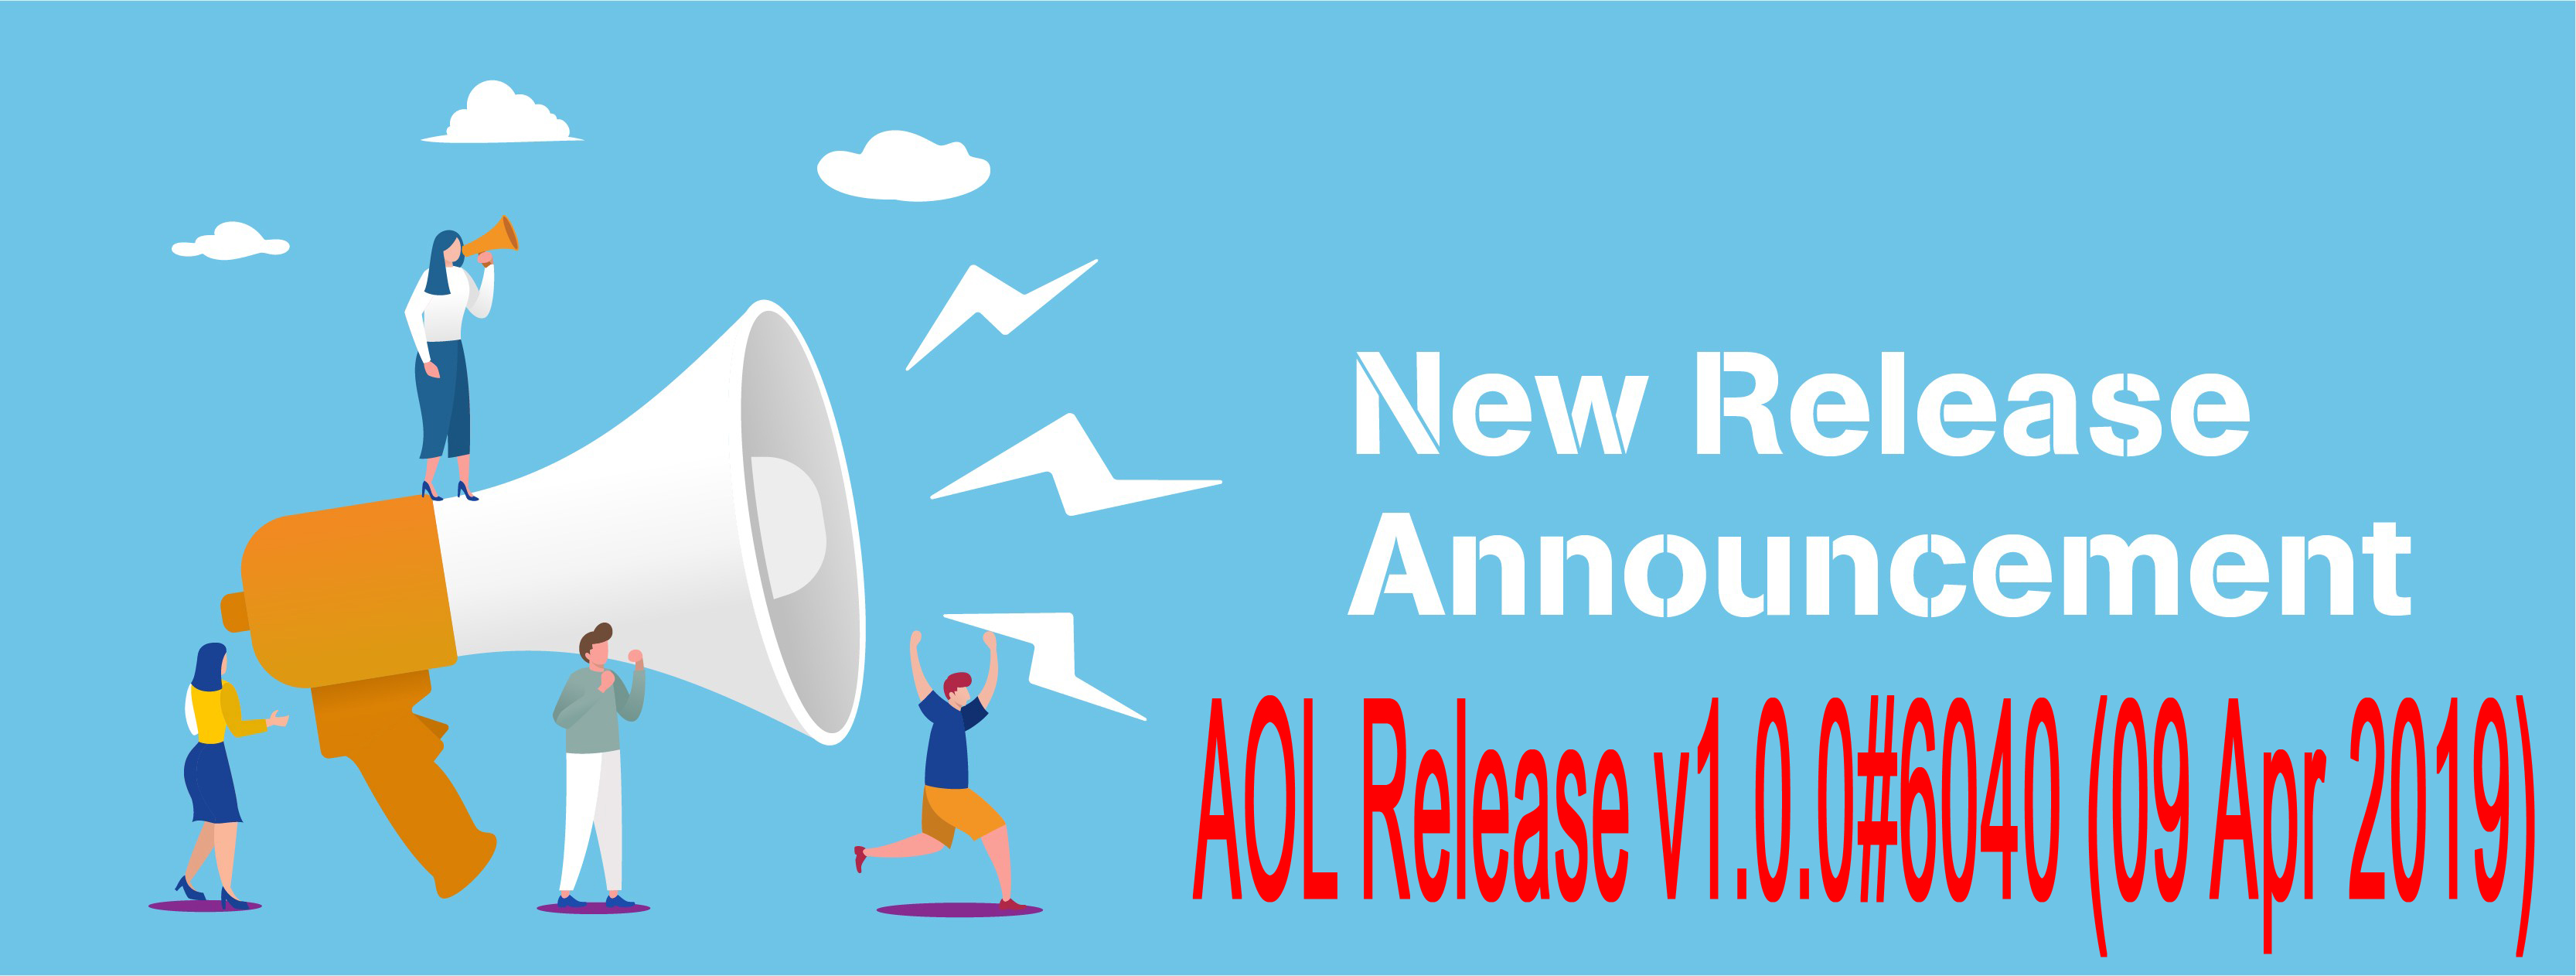 Release v1.0.0#6040 (09 Apr 2019)